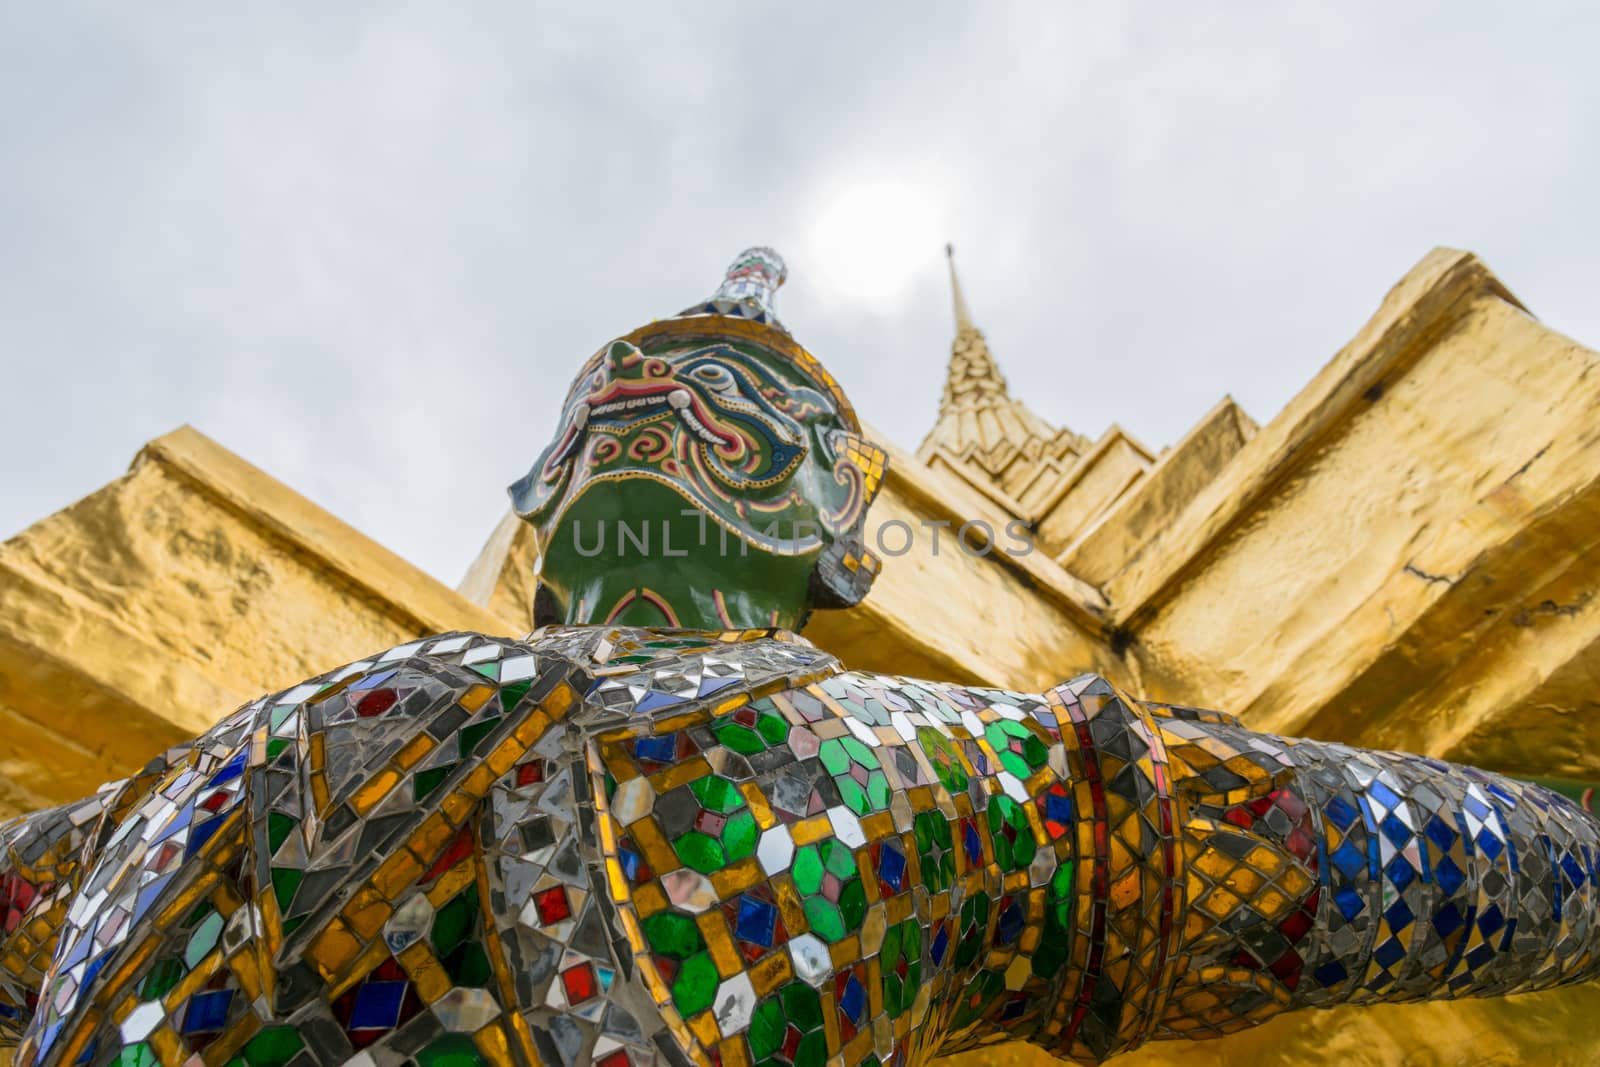 Wat Phra Kaew by nicousnake